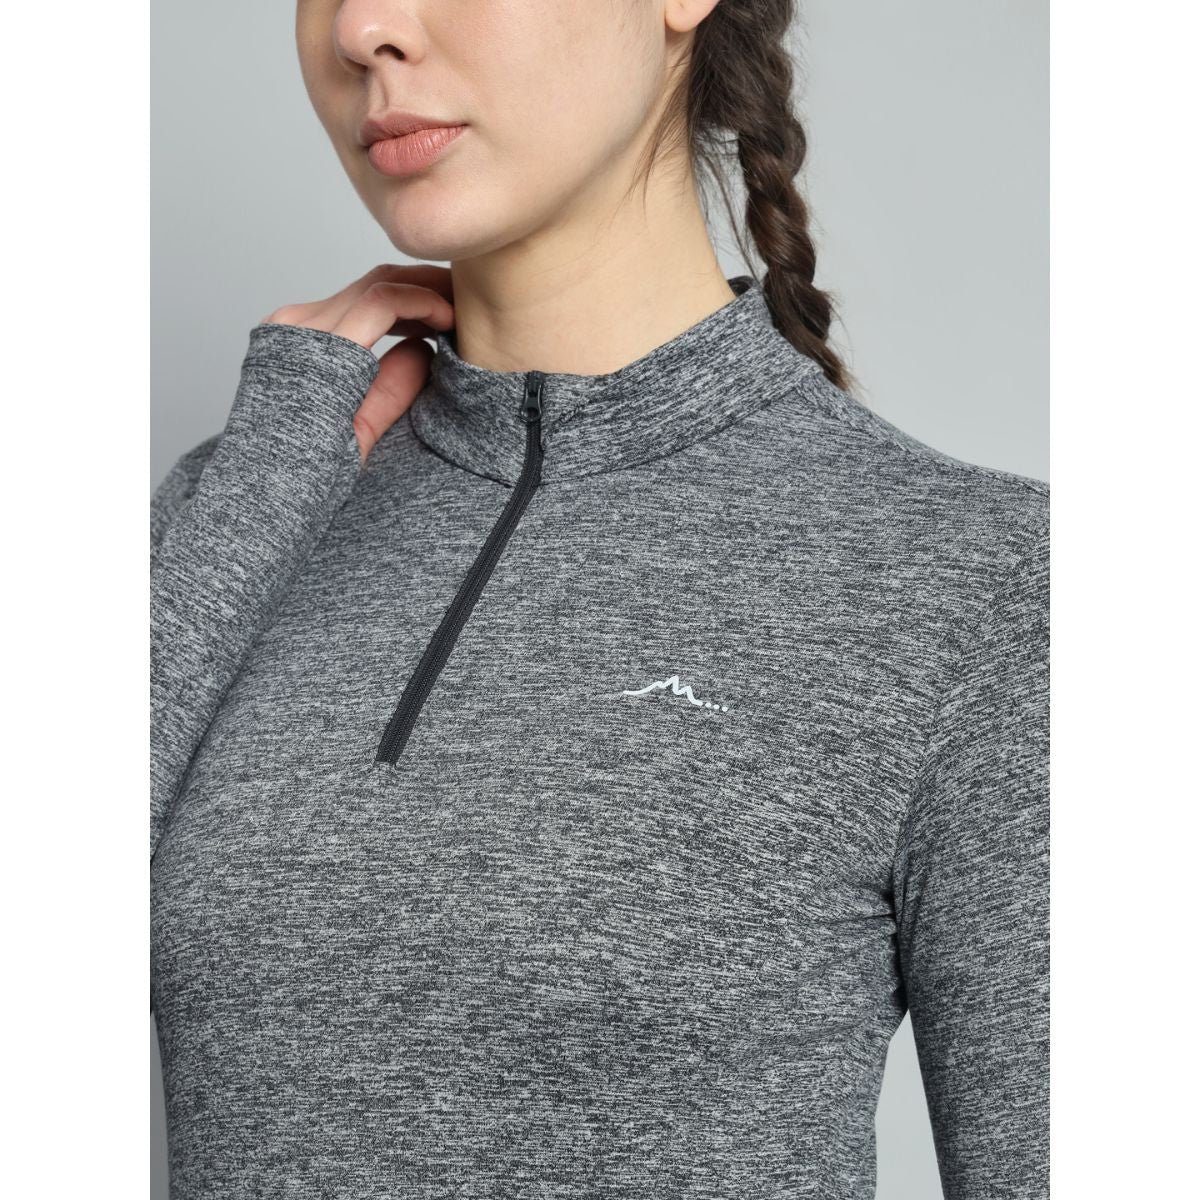 Women's Nomadic Full Sleeves T-Shirt / Baselayer - Charcoal Gray 5